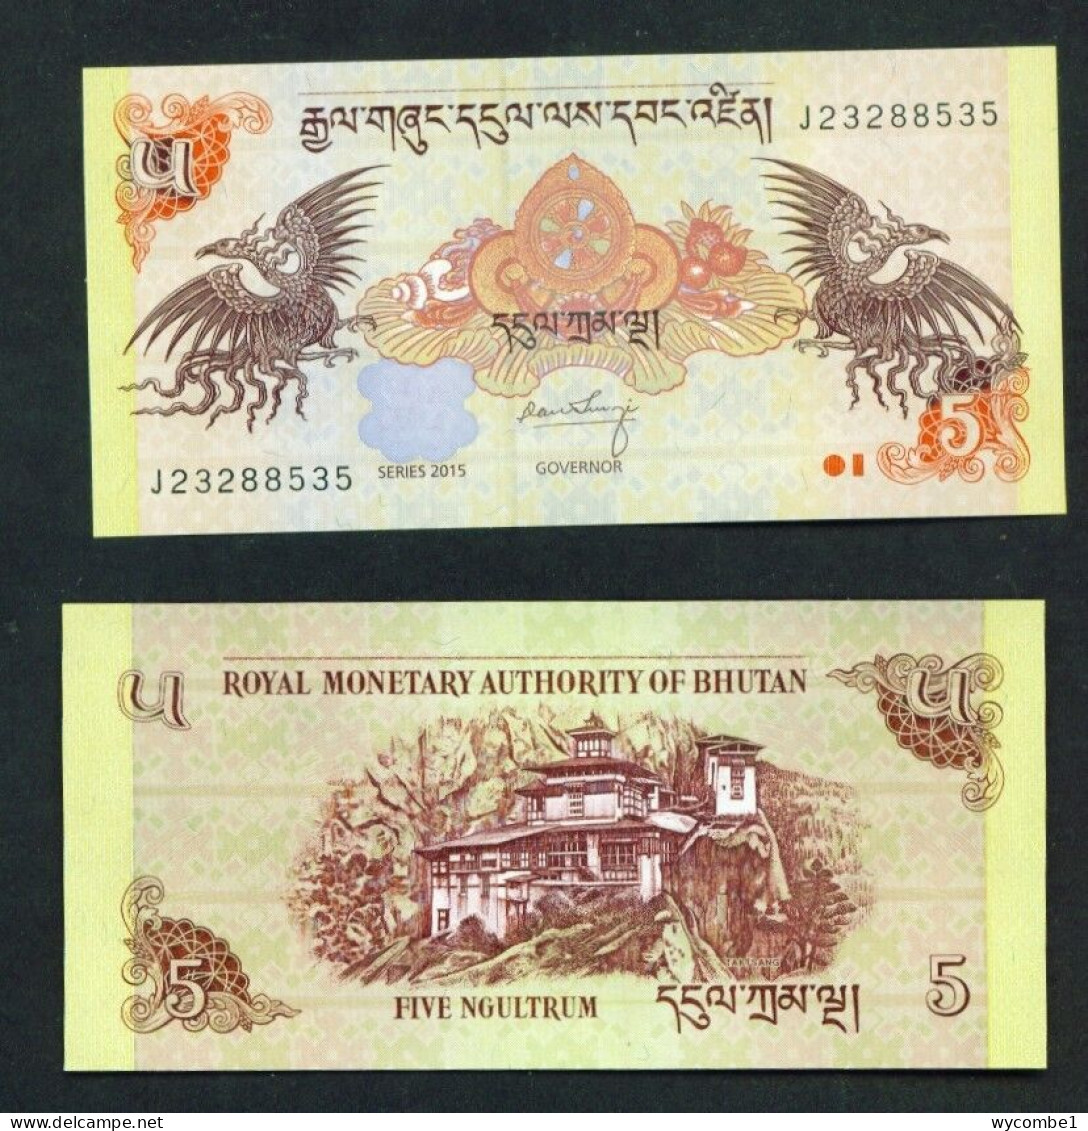 BHUTAN  -  2015  5 Ngultrum  UNC  Banknote - Bhoutan